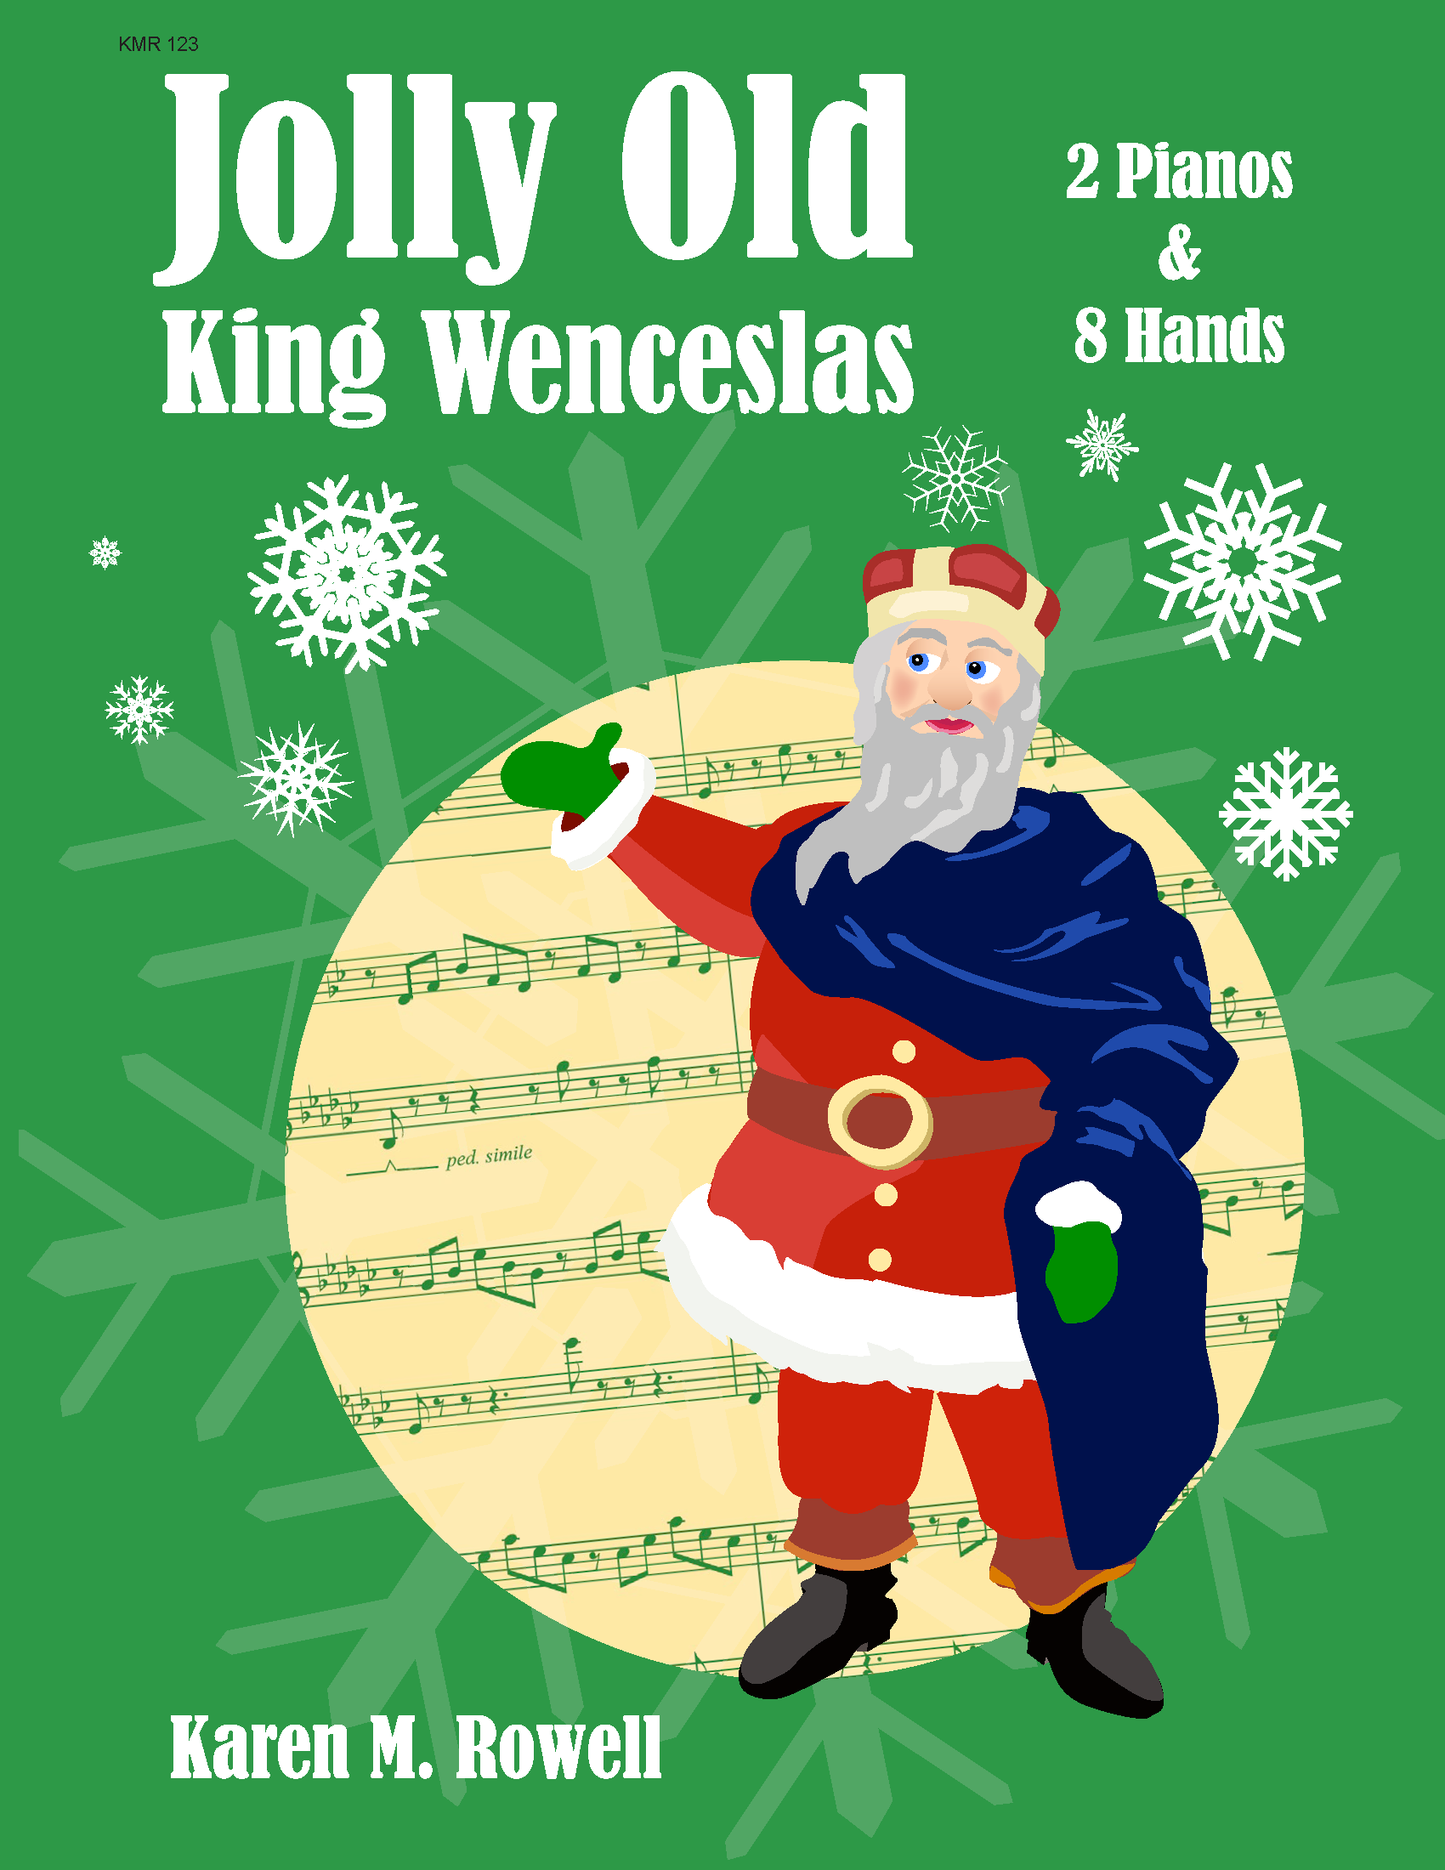 Jolly Old King Wenceslas (Studio License PDF)